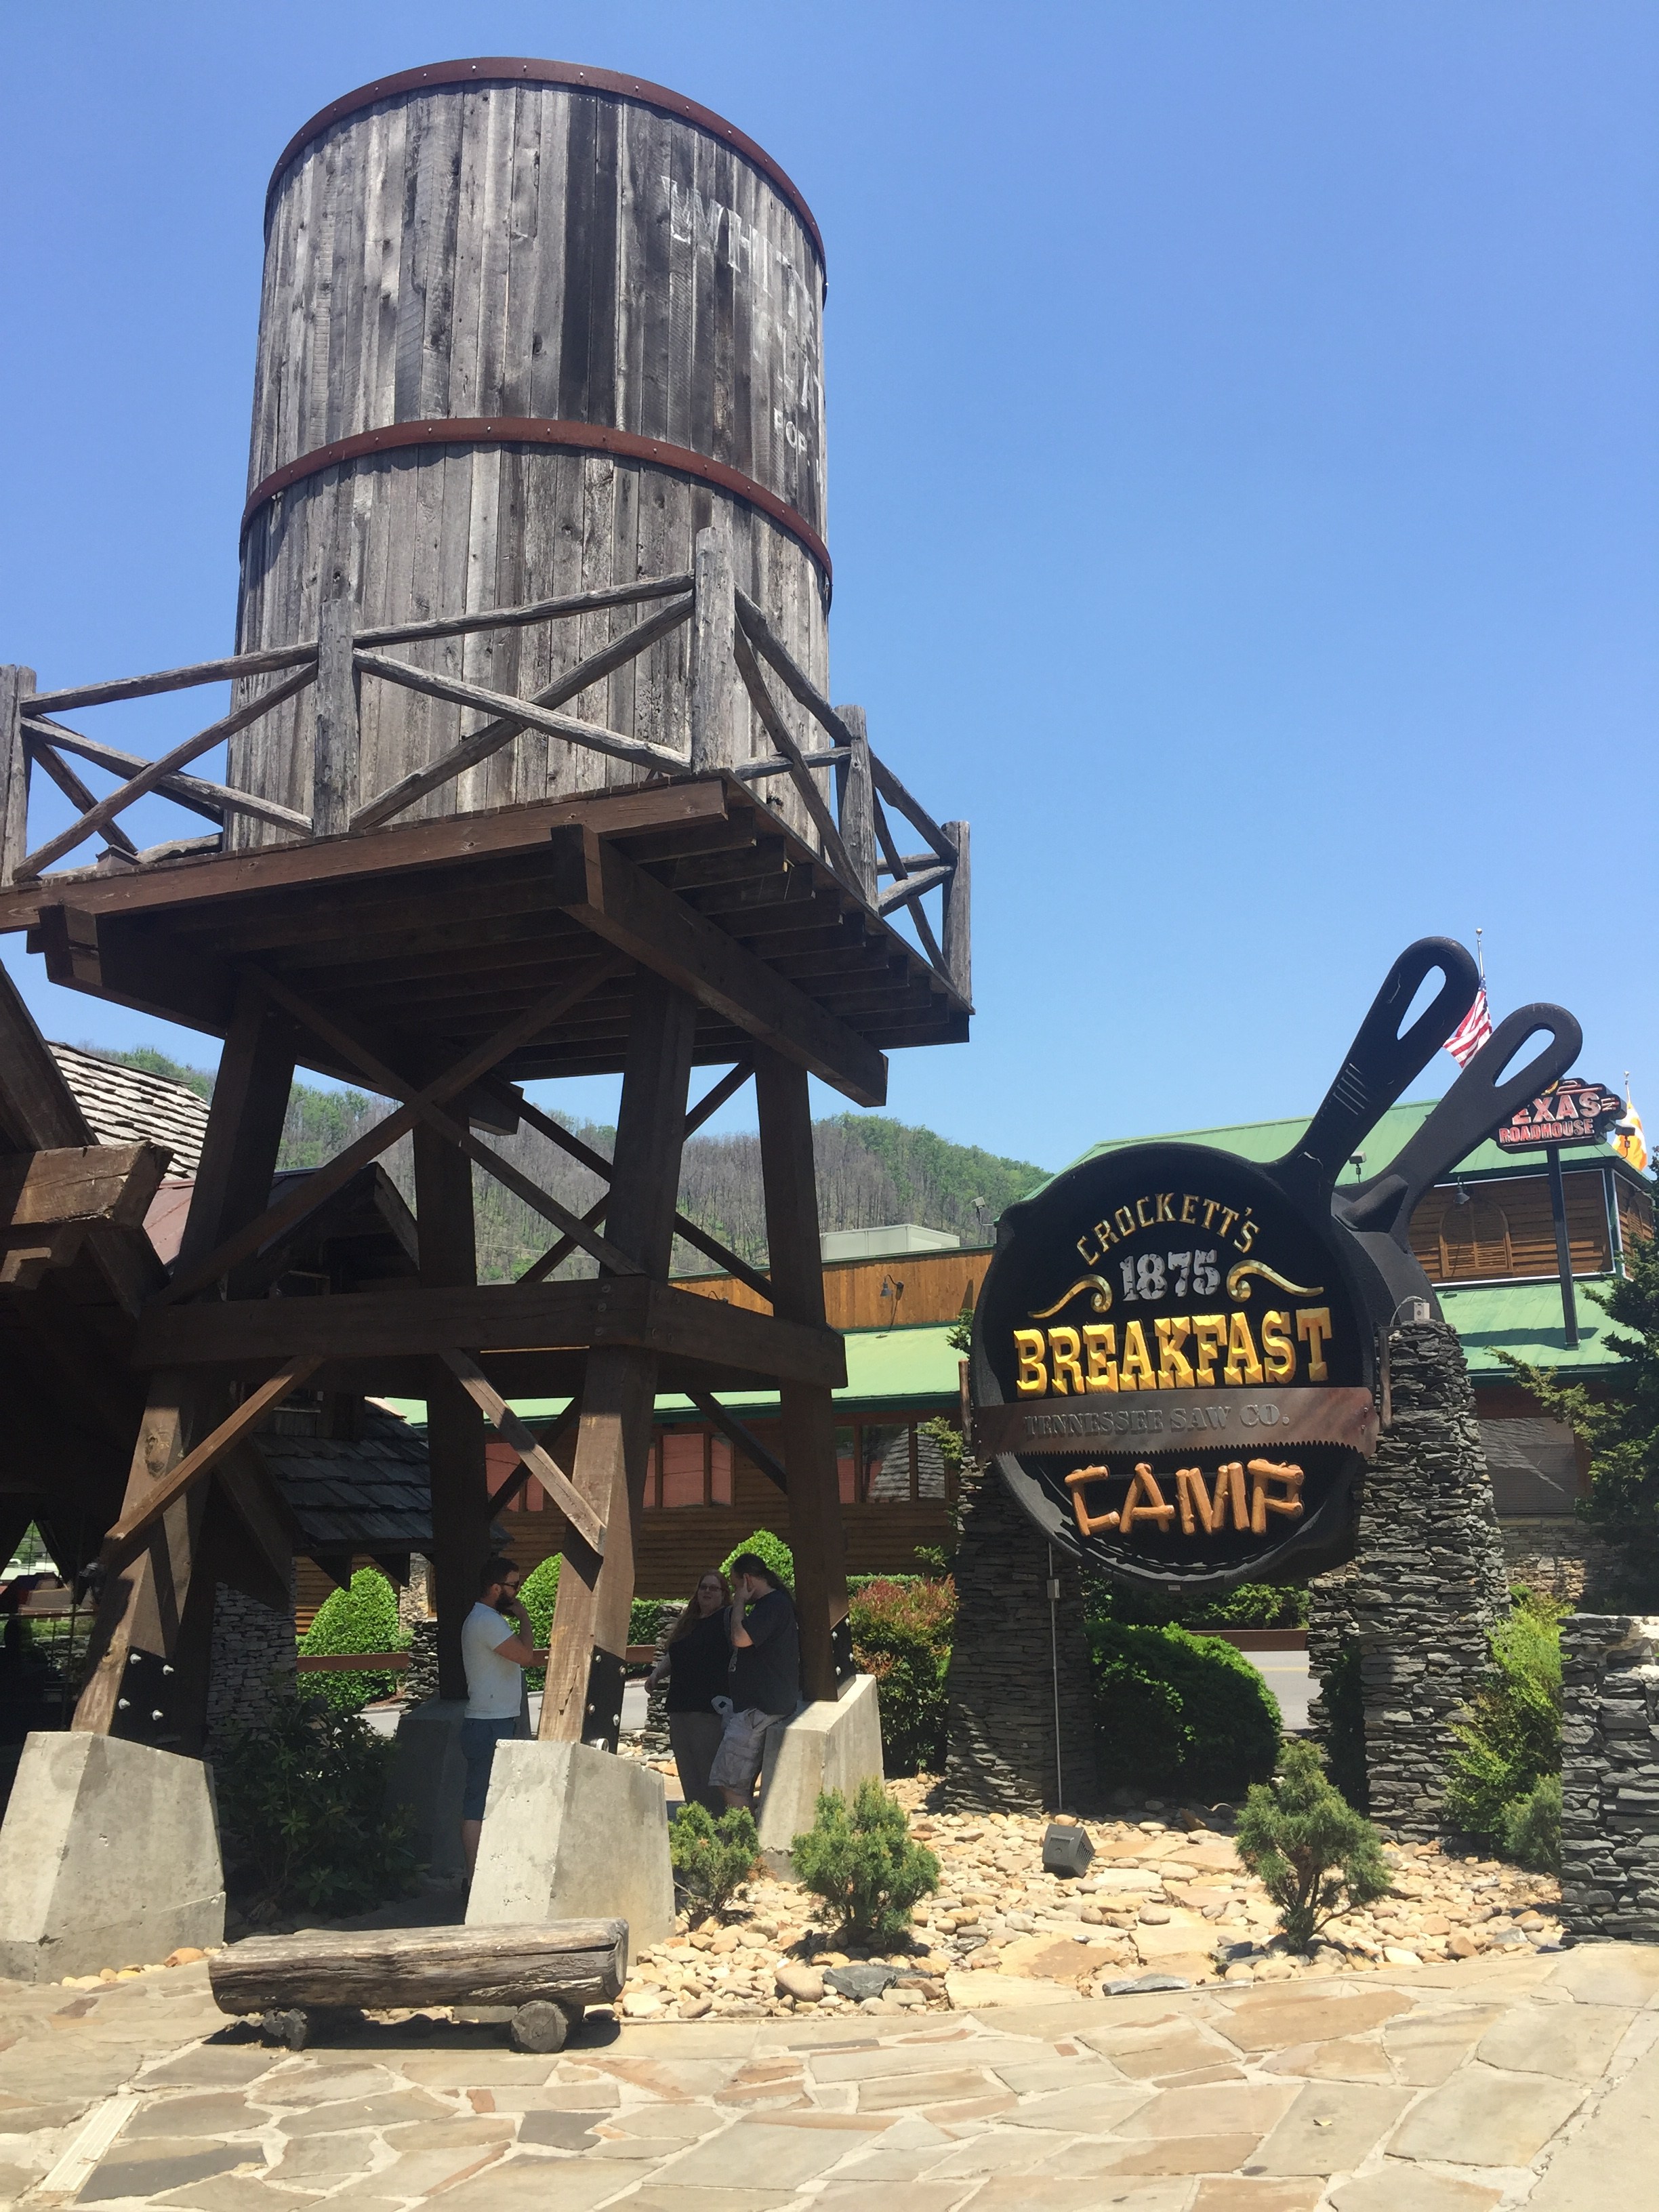 Crocktt's Breakfast Camp building